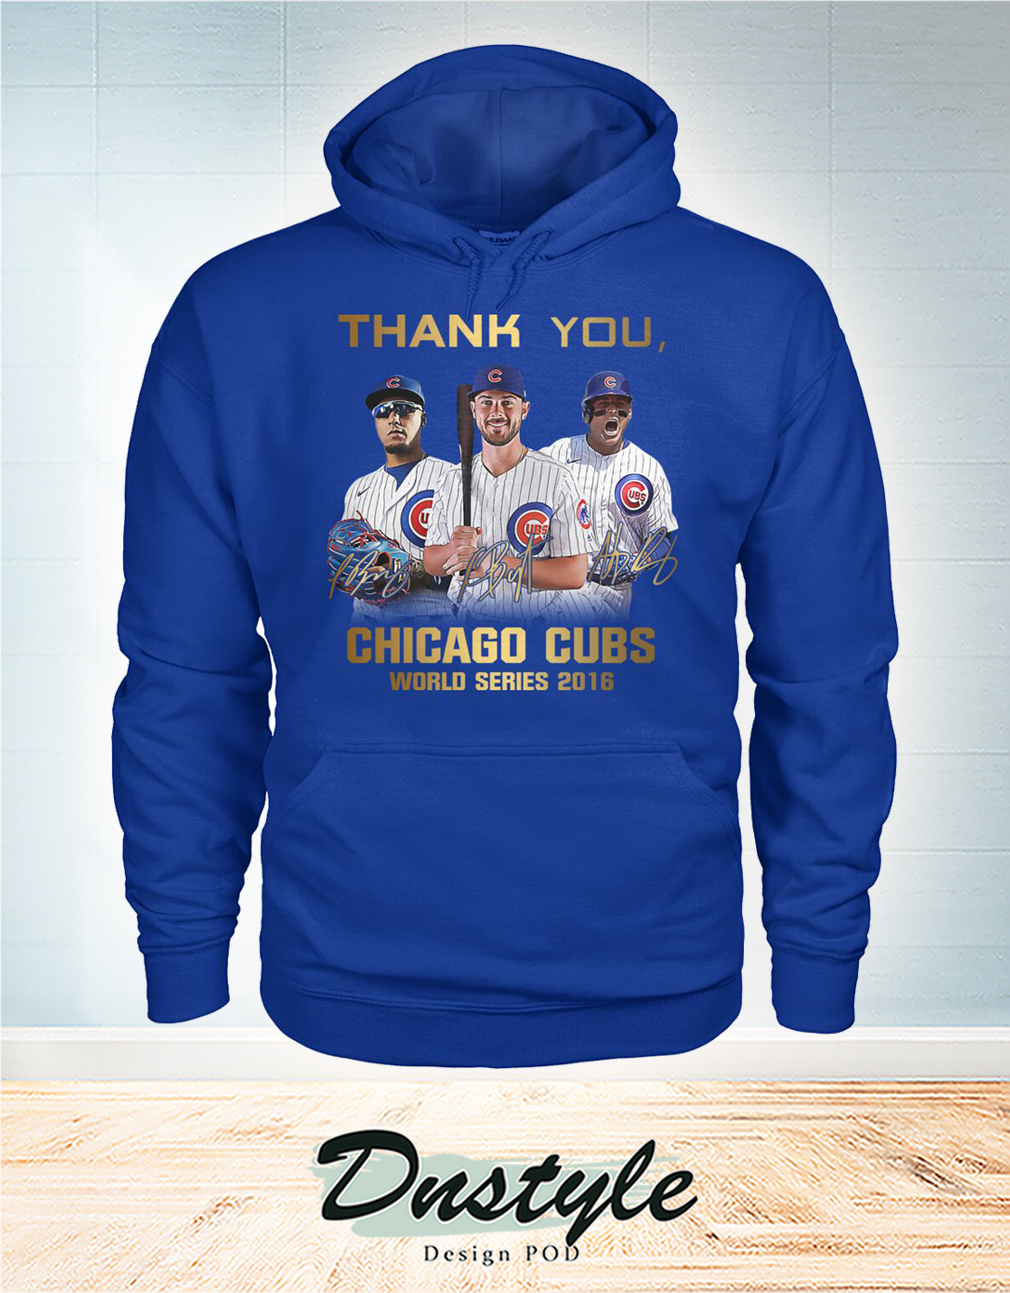 Thank you Chicago cubs world series 2016 shirt